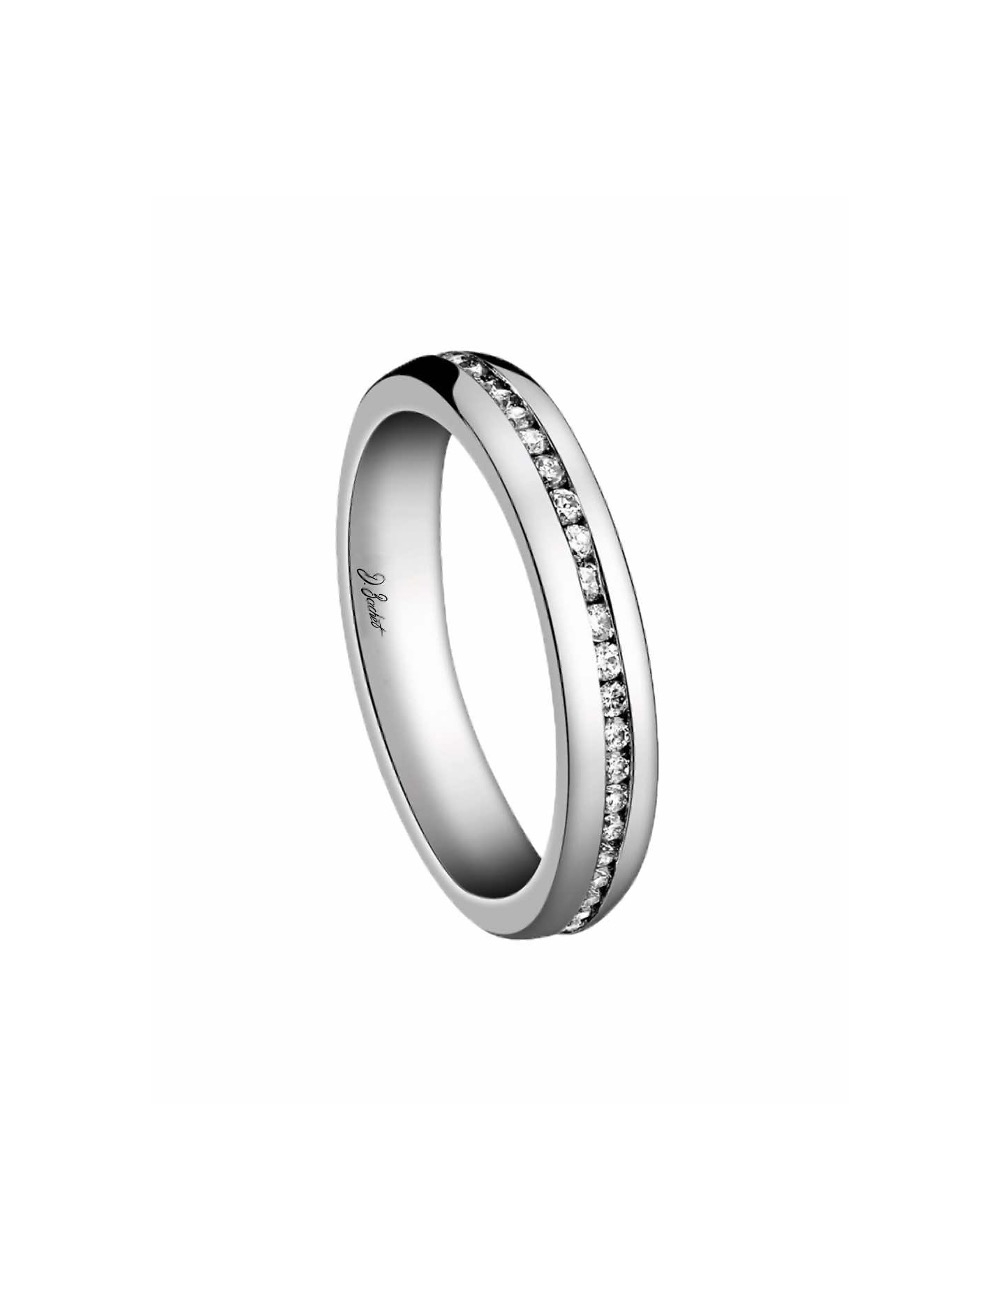 An eternity wedding ring for women set all around with white diamonds.